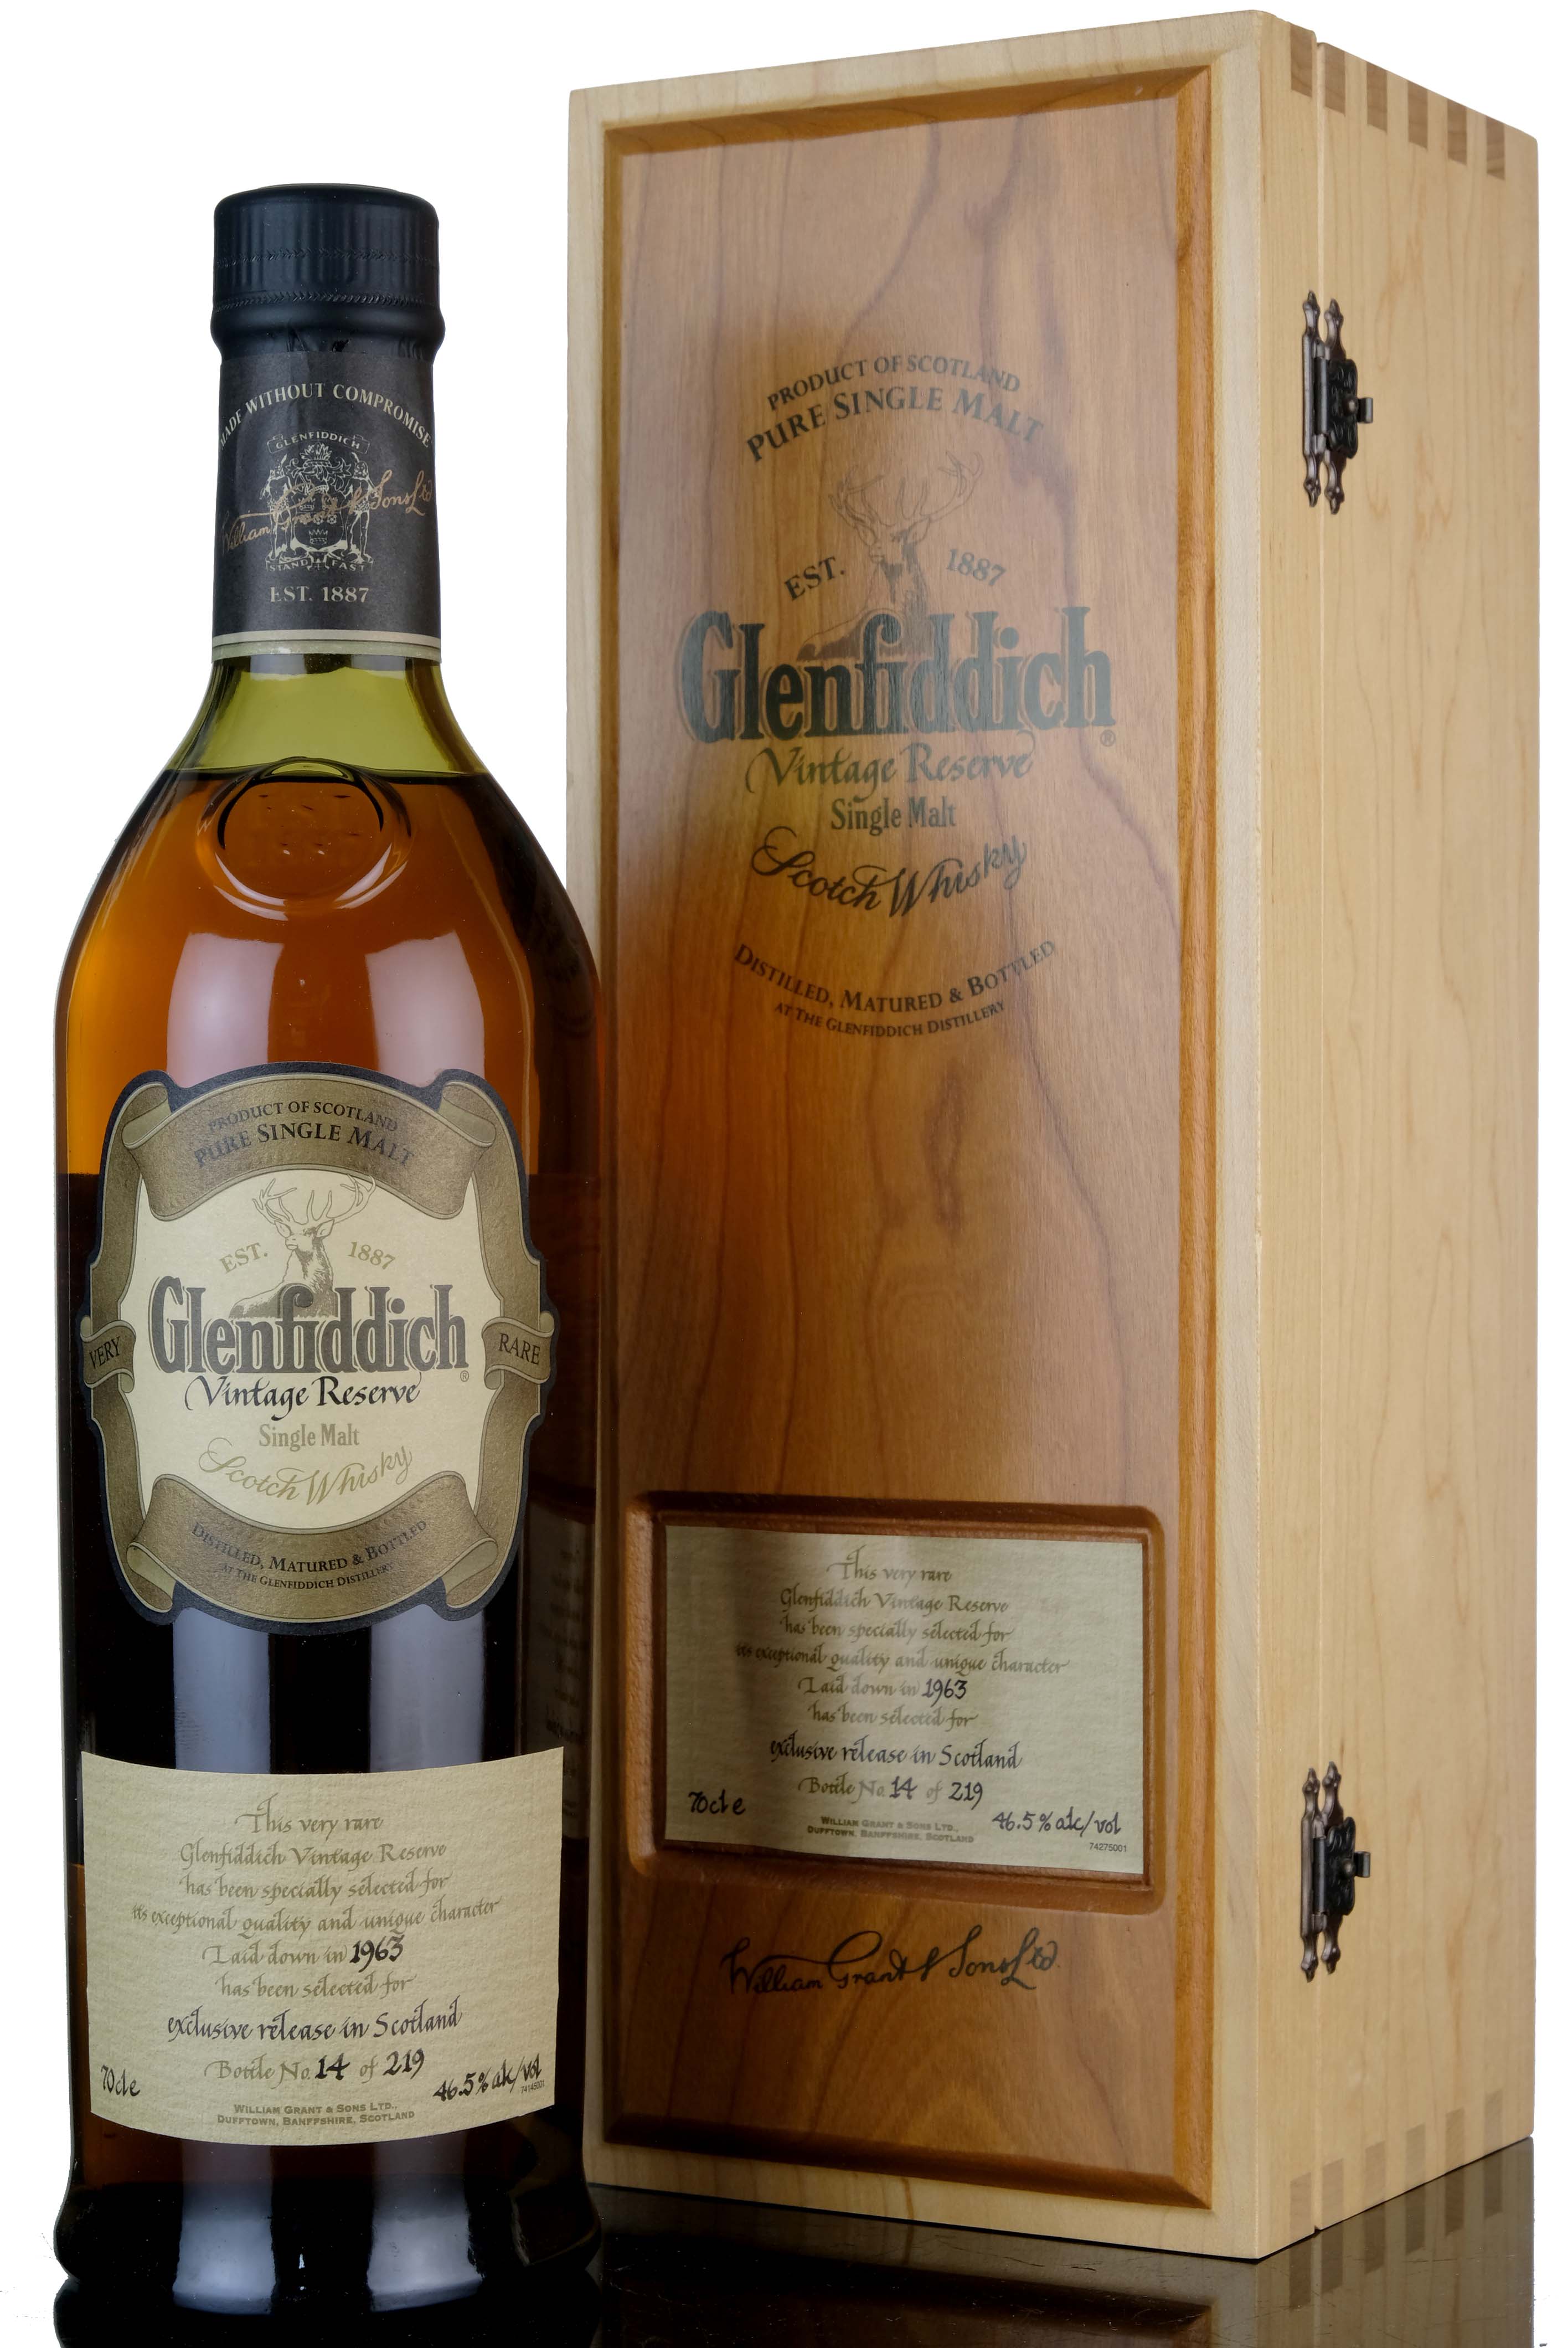 Glenfiddich 1963-2001 - Vintage Reserve - Single Cask 12730 - Scotland Exclusive